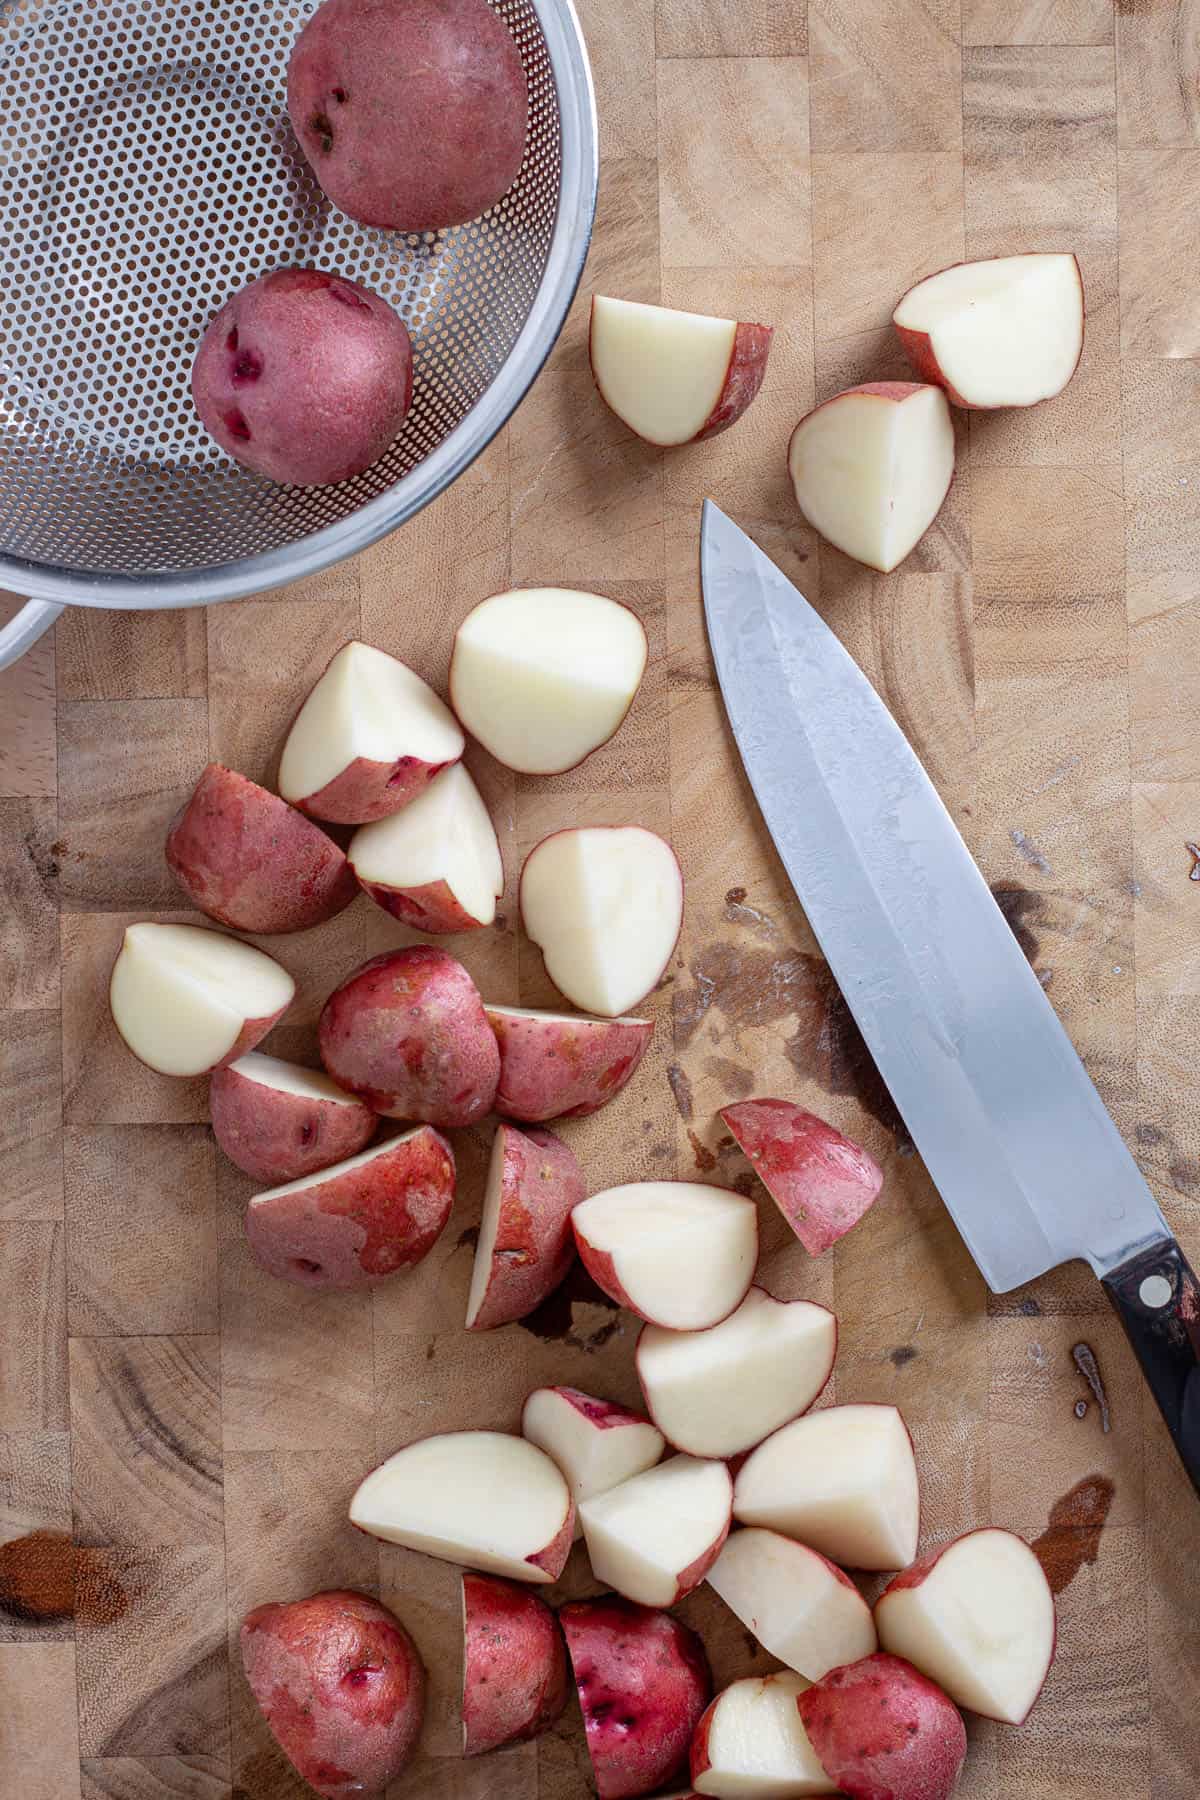 Red potatoes on a butcherblock cutting board getting chopped.